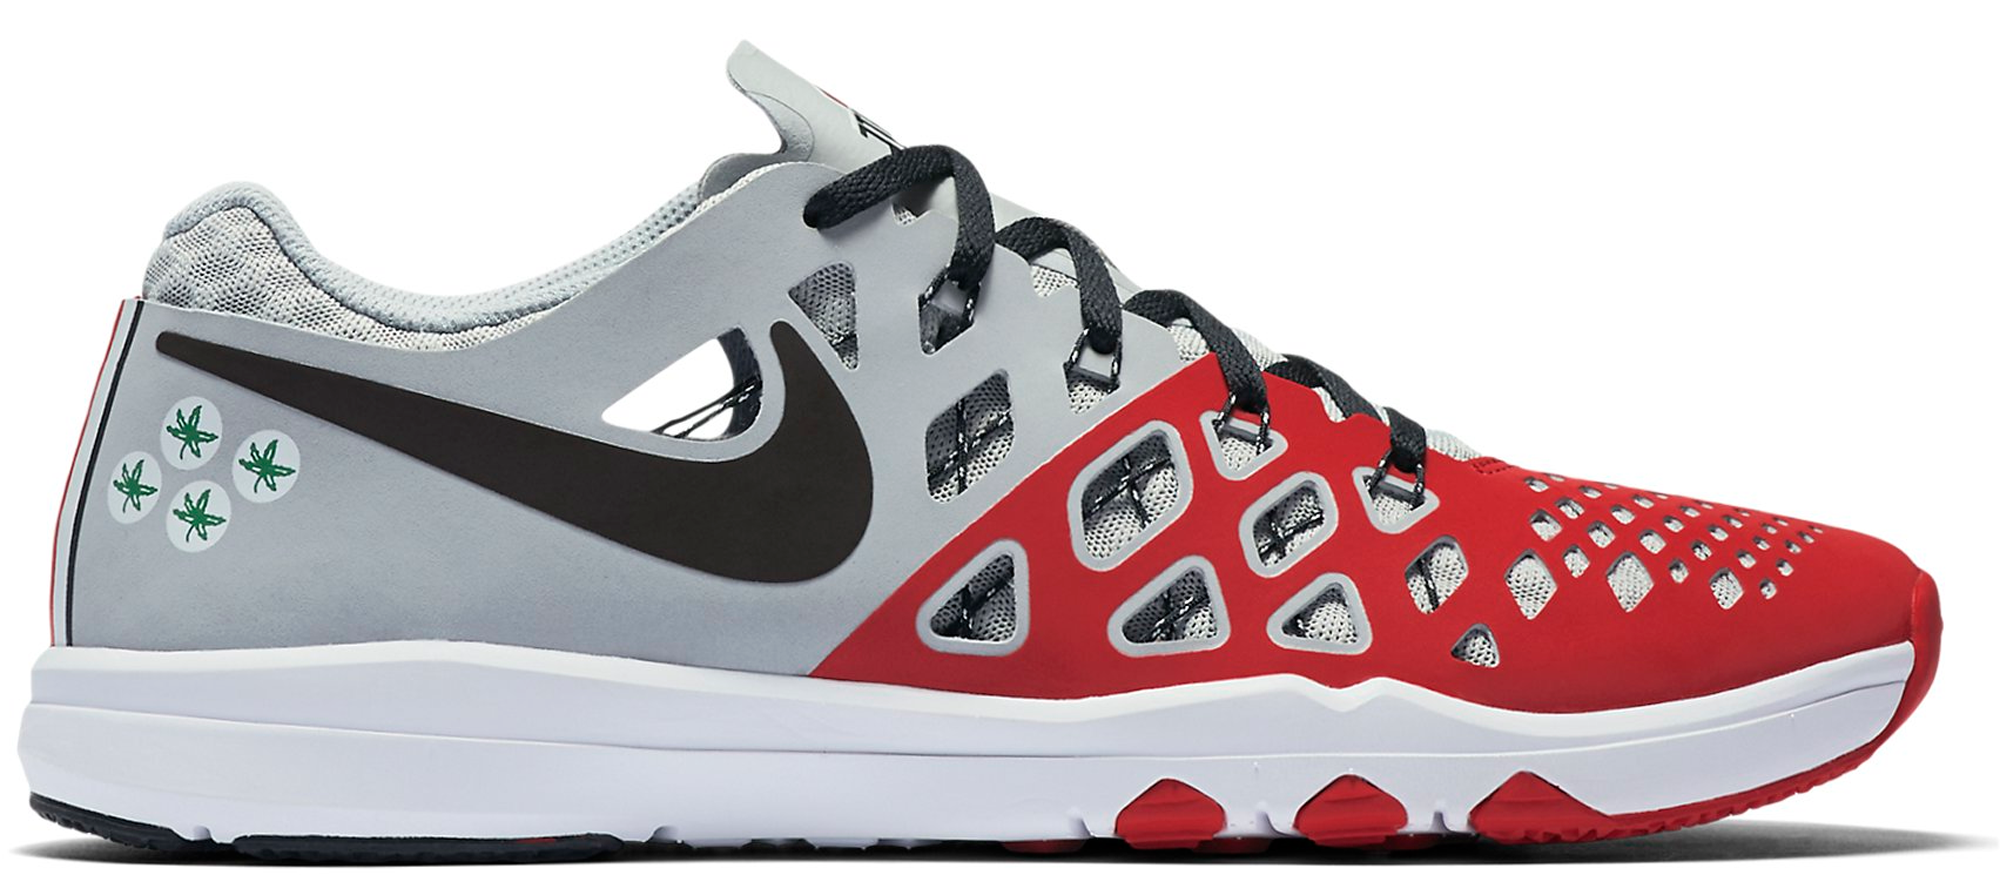 Nike Men's Zoom Train Action Training Shoe Anthracite/White/University  Red/Black Size 8 M US : Amazon.in: Shoes & Handbags